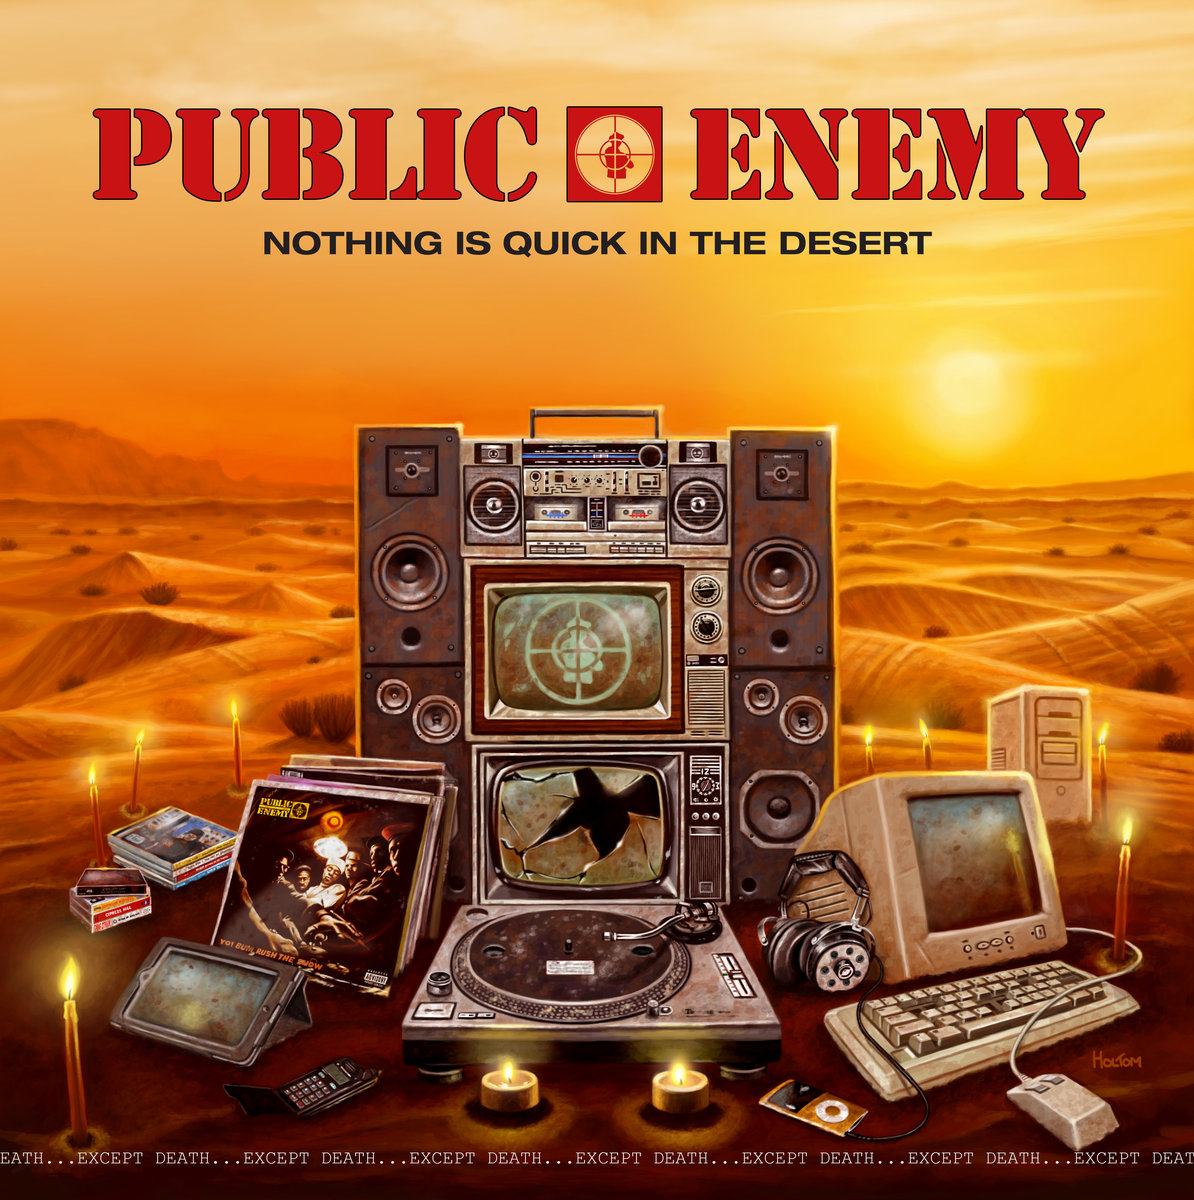 Public Enemy free album to celebrate their 30th anniversary